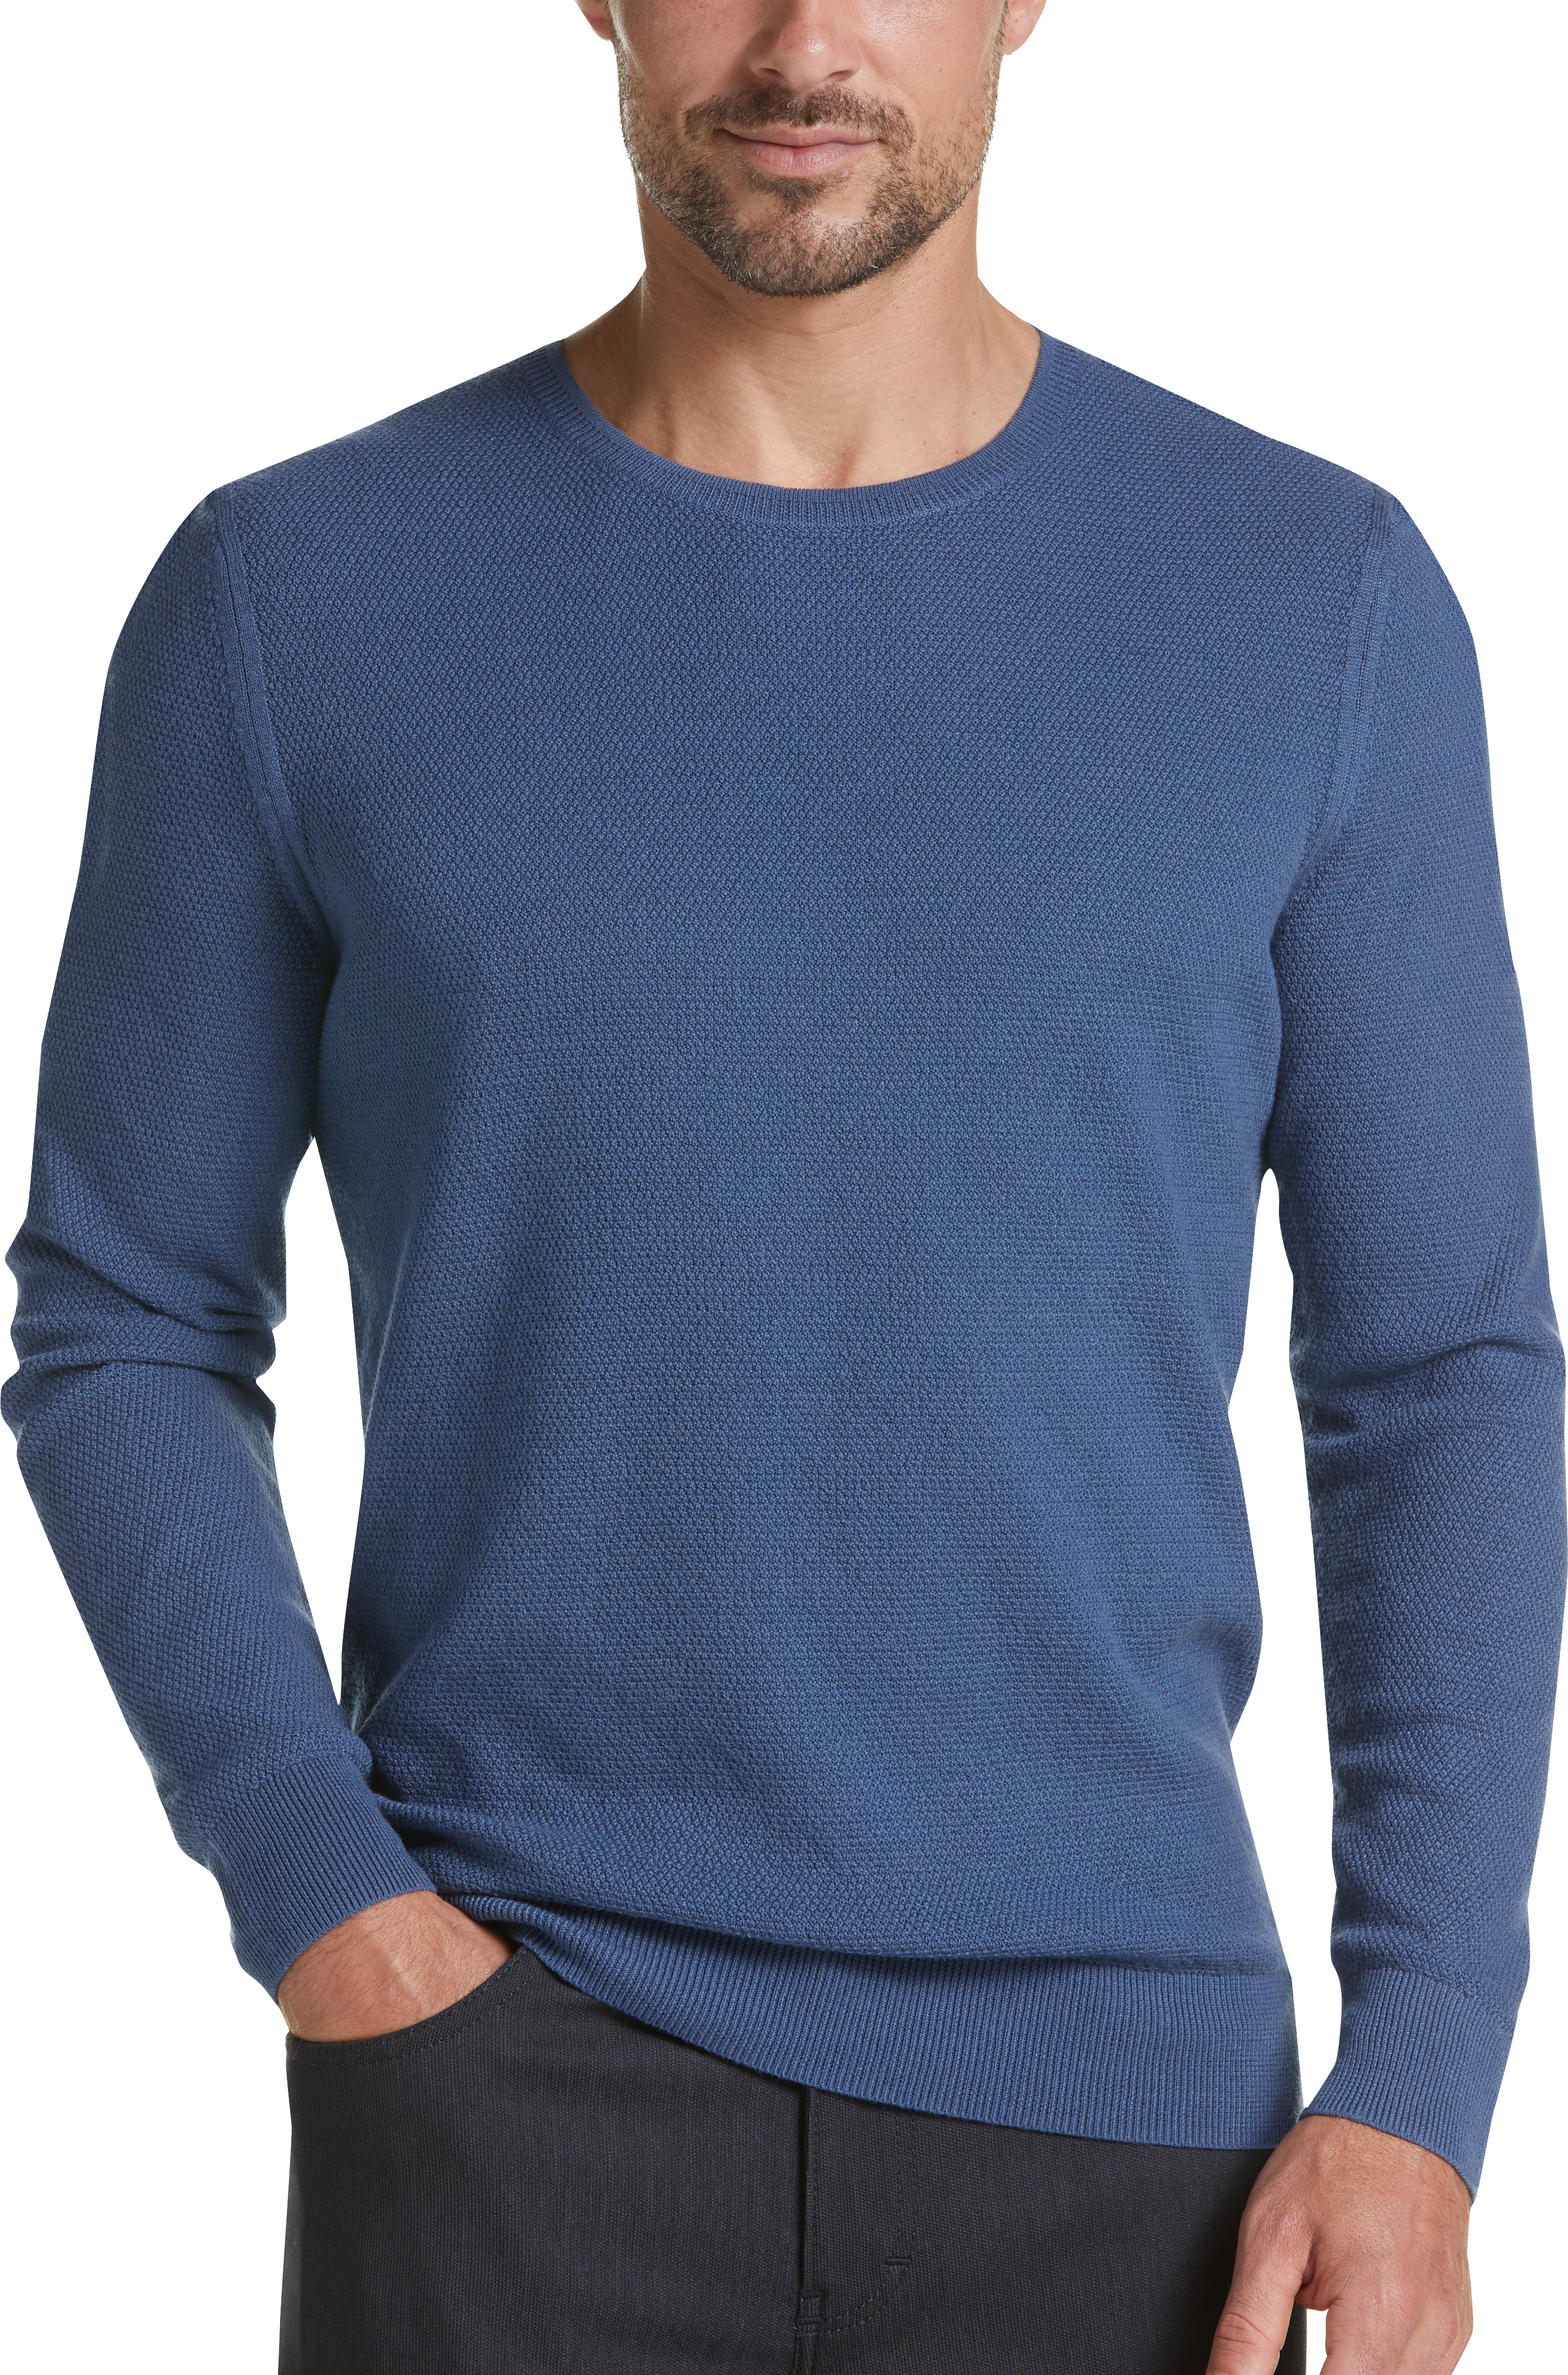 JOE Joseph Abboud Blue Slim Fit Crew Neck Sweater - Men's Big & Tall ...